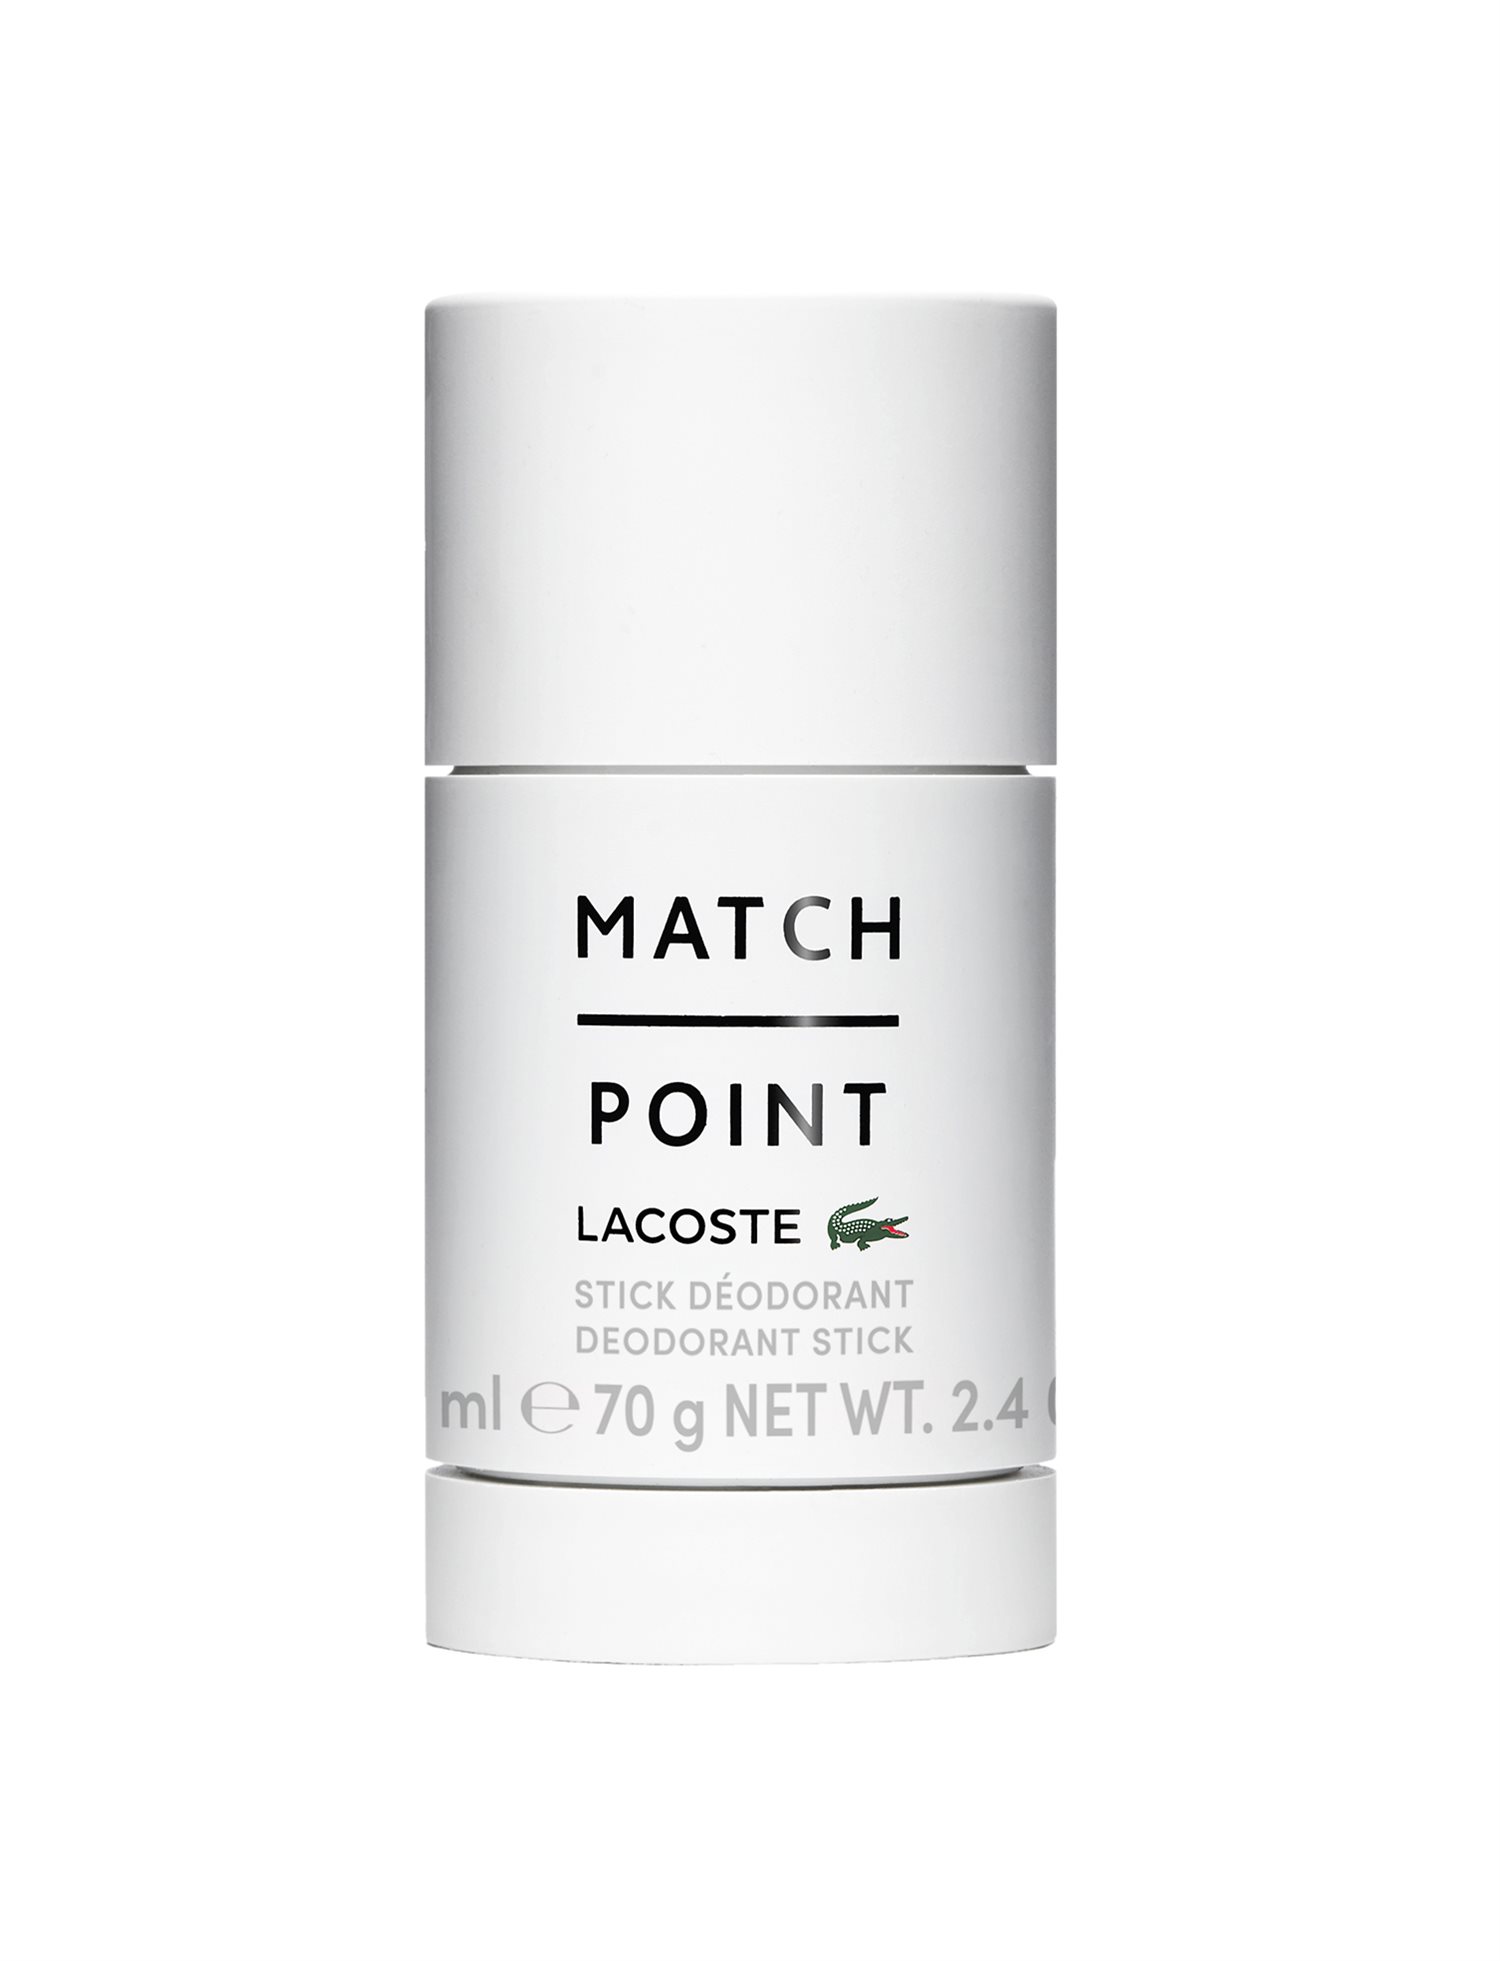 Lacoste Match Point Deodorant Stick ml.